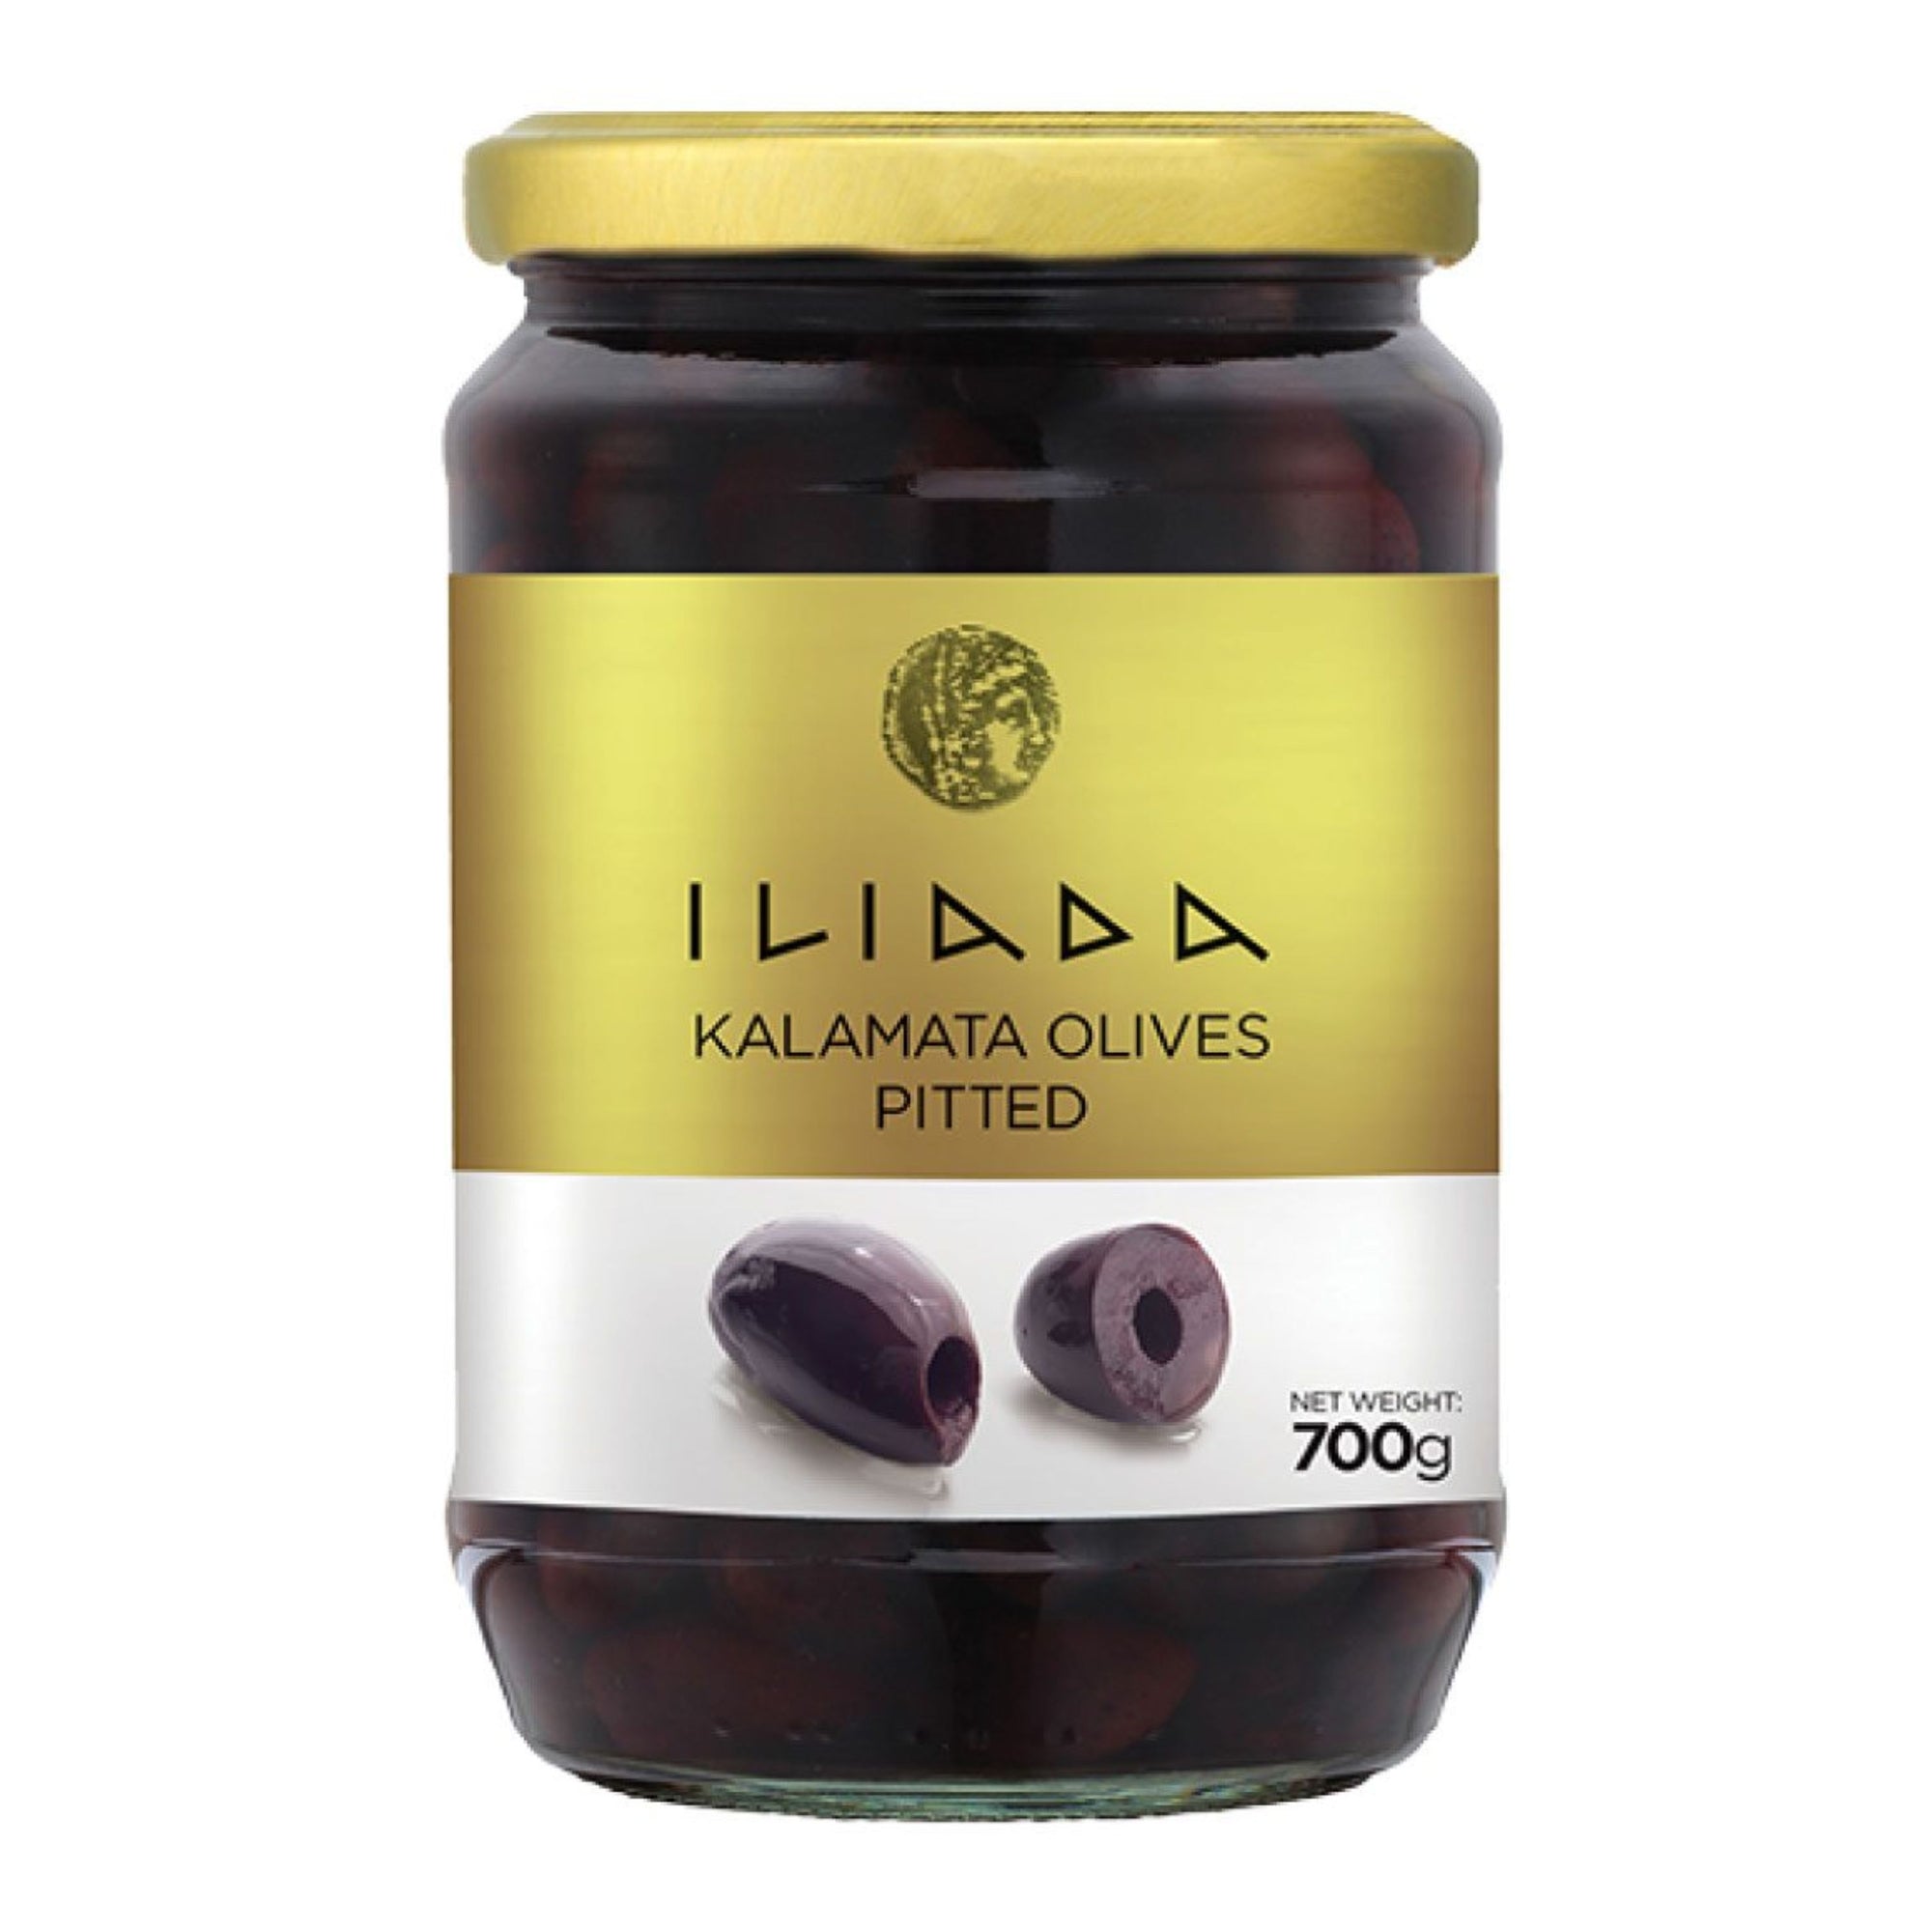 Kalamata Pitted Olives 'Iliada' 700g